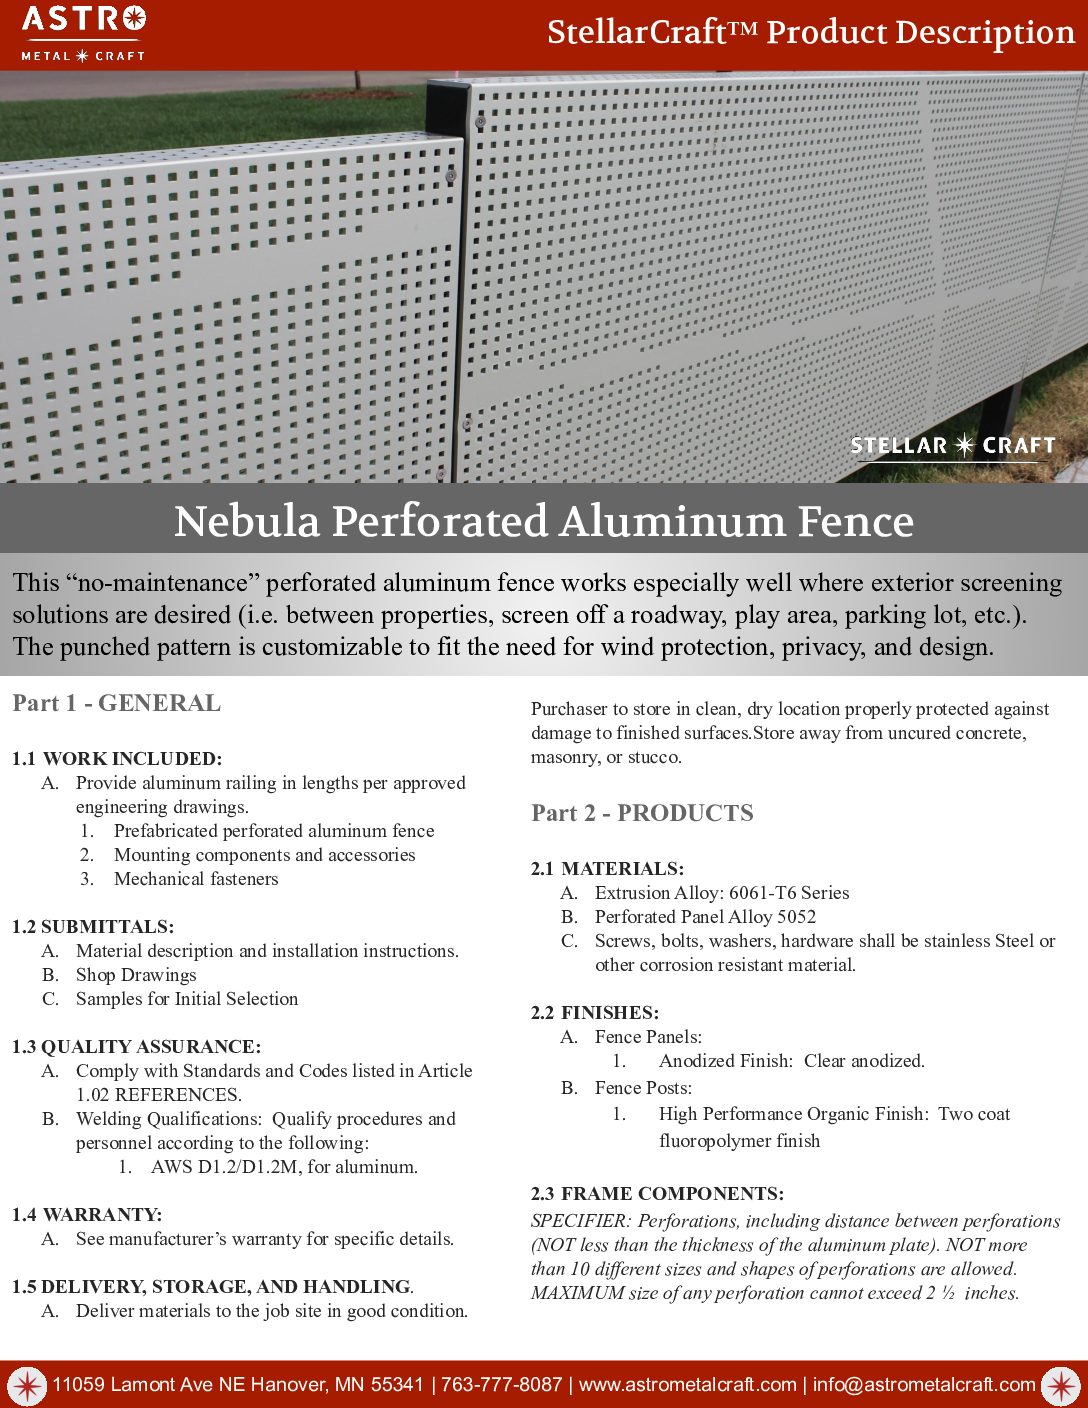 Astro Metal Craft – Stellar Craft Nebula Perforated Aluminum Fence Line Card